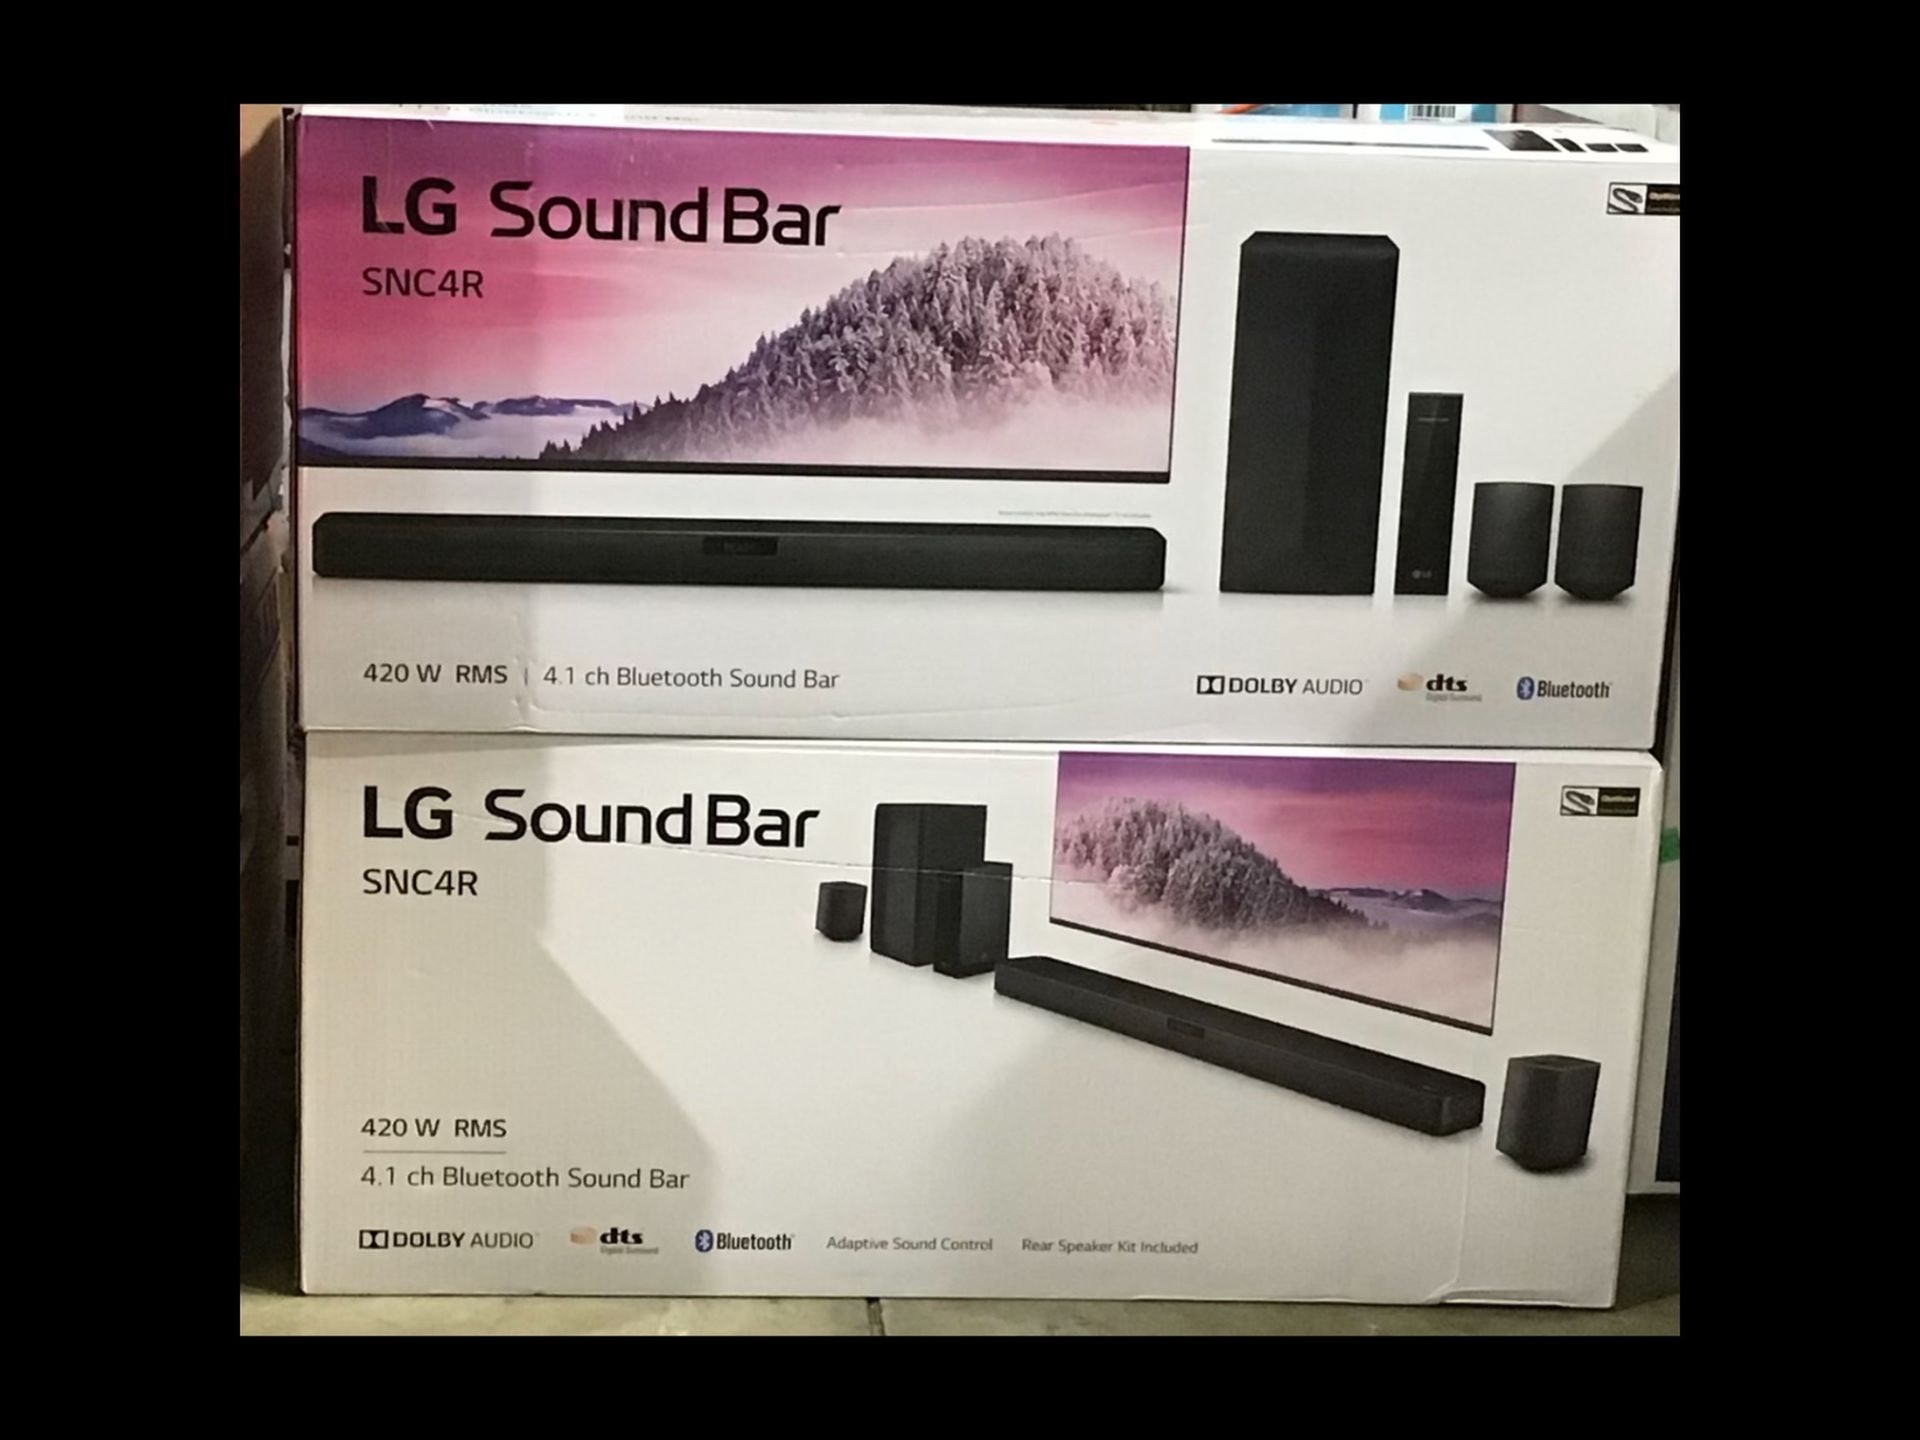 LG Sound Bar SNC4R 420 W RMS 